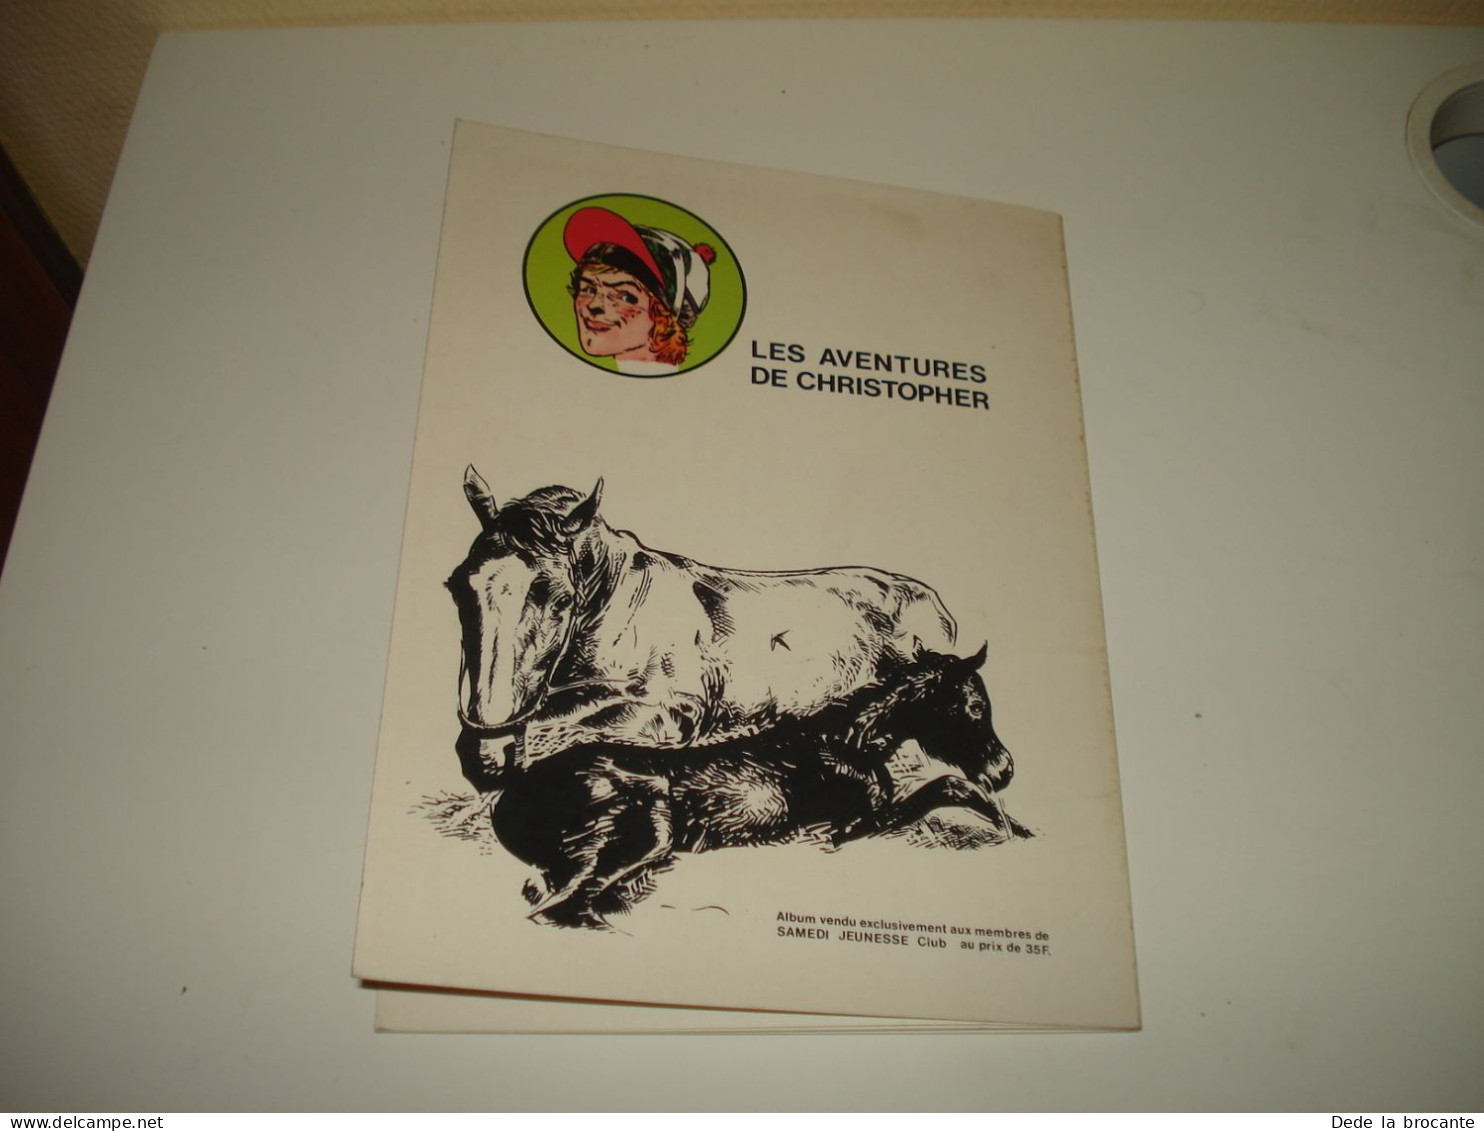 C54 / Les aventures de Christopher " Graine de jockey " - EO de 1973 - Etat neuf